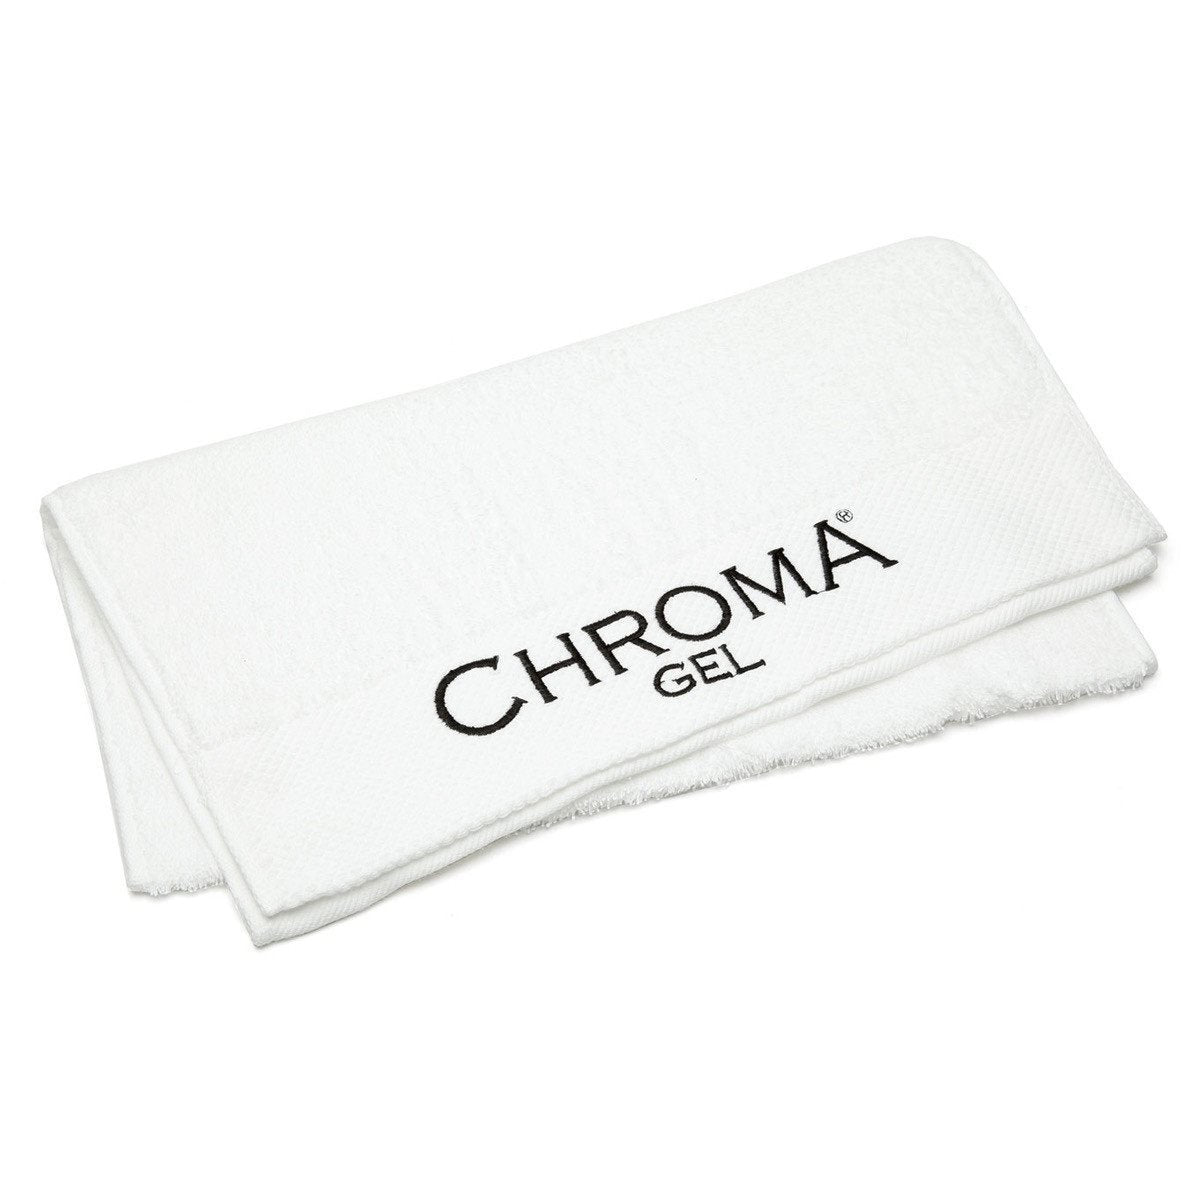 Chroma Gel Nail Desk Towel | Manicure Towel 40x80 cm - Beauty Hair Products LtdAccessories